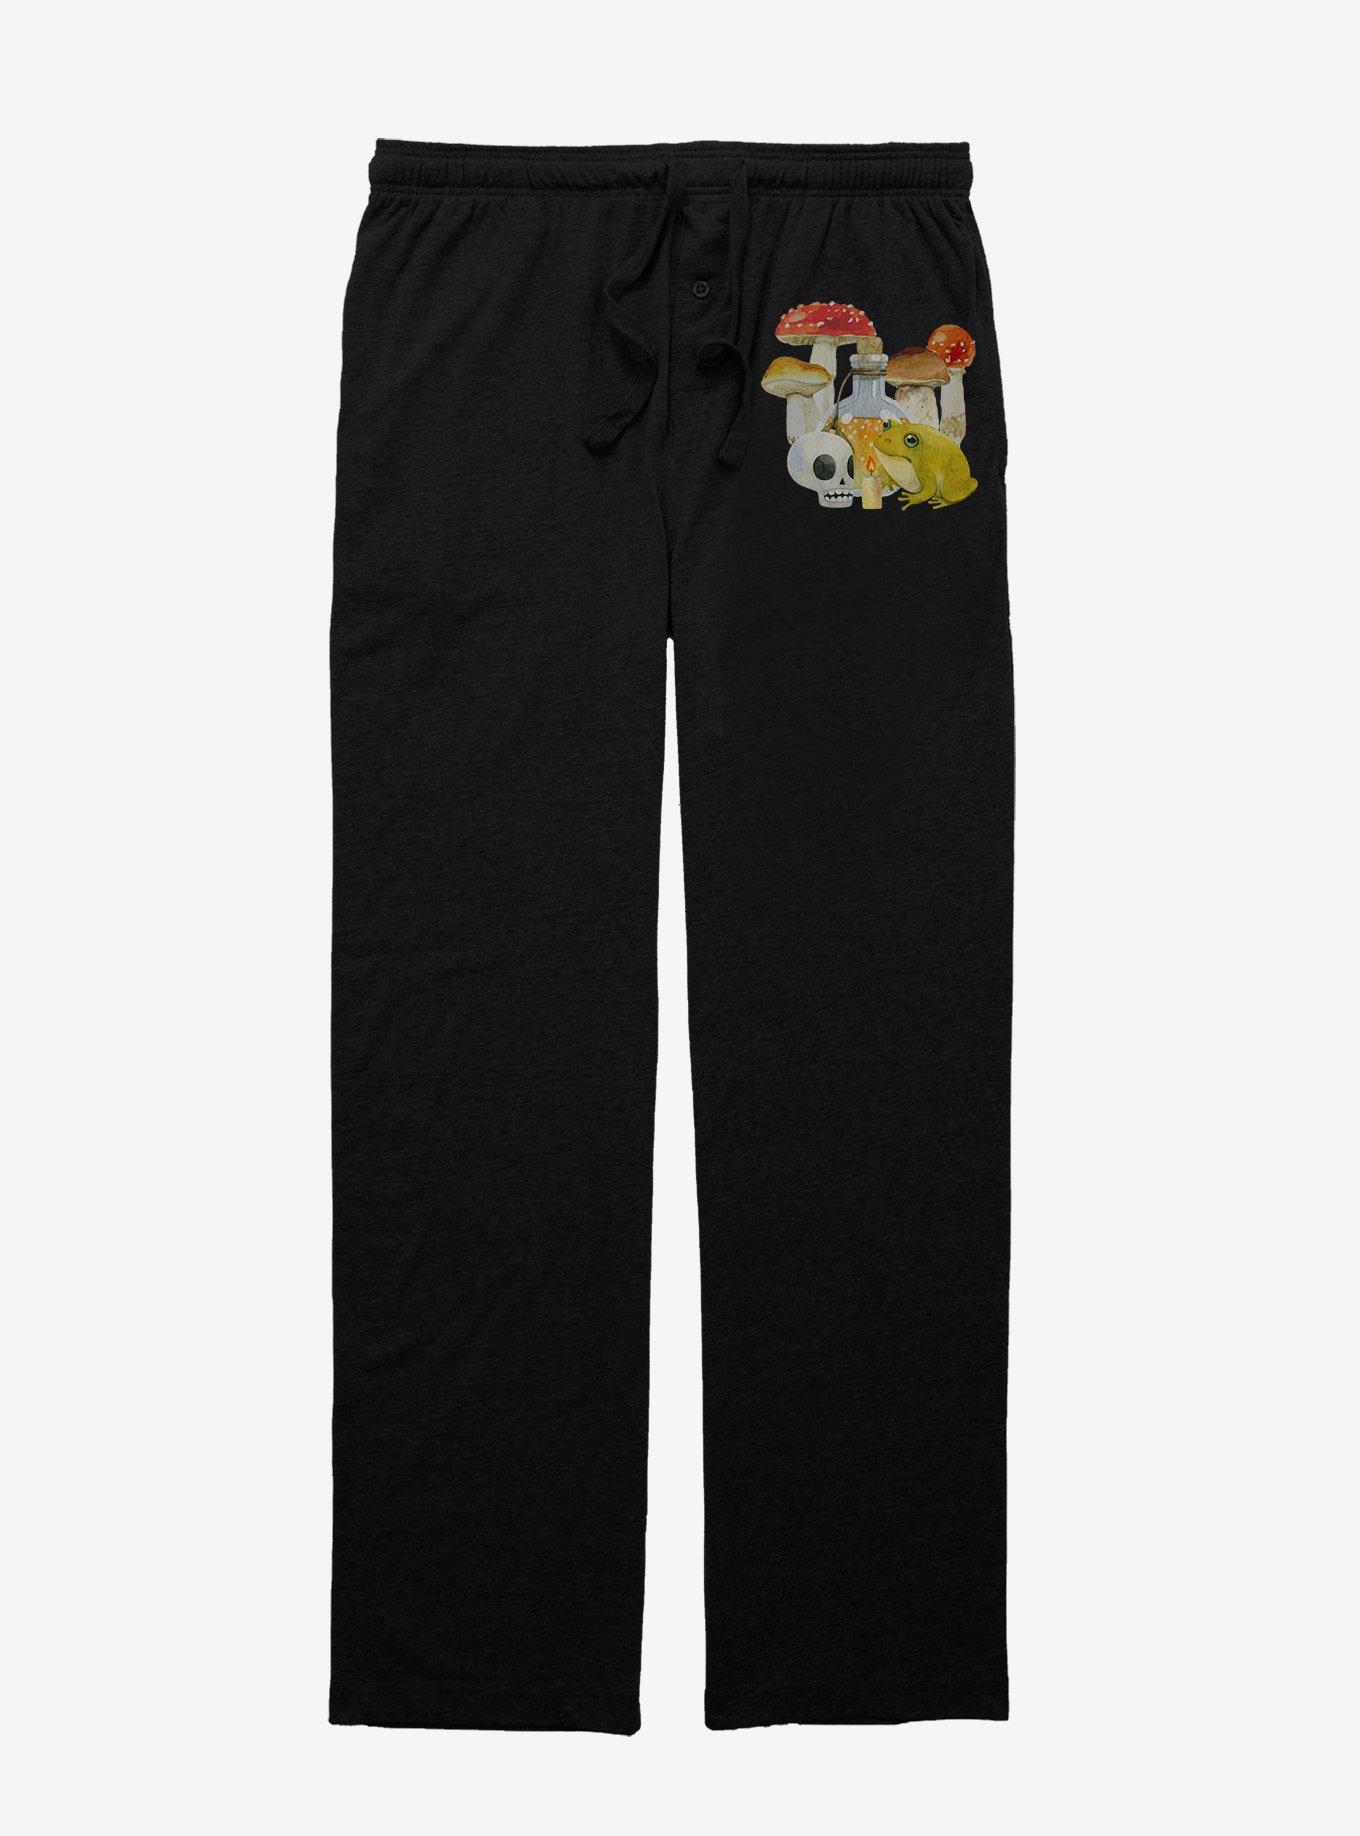 Trippy Frog Pajama Pants, BLACK, hi-res